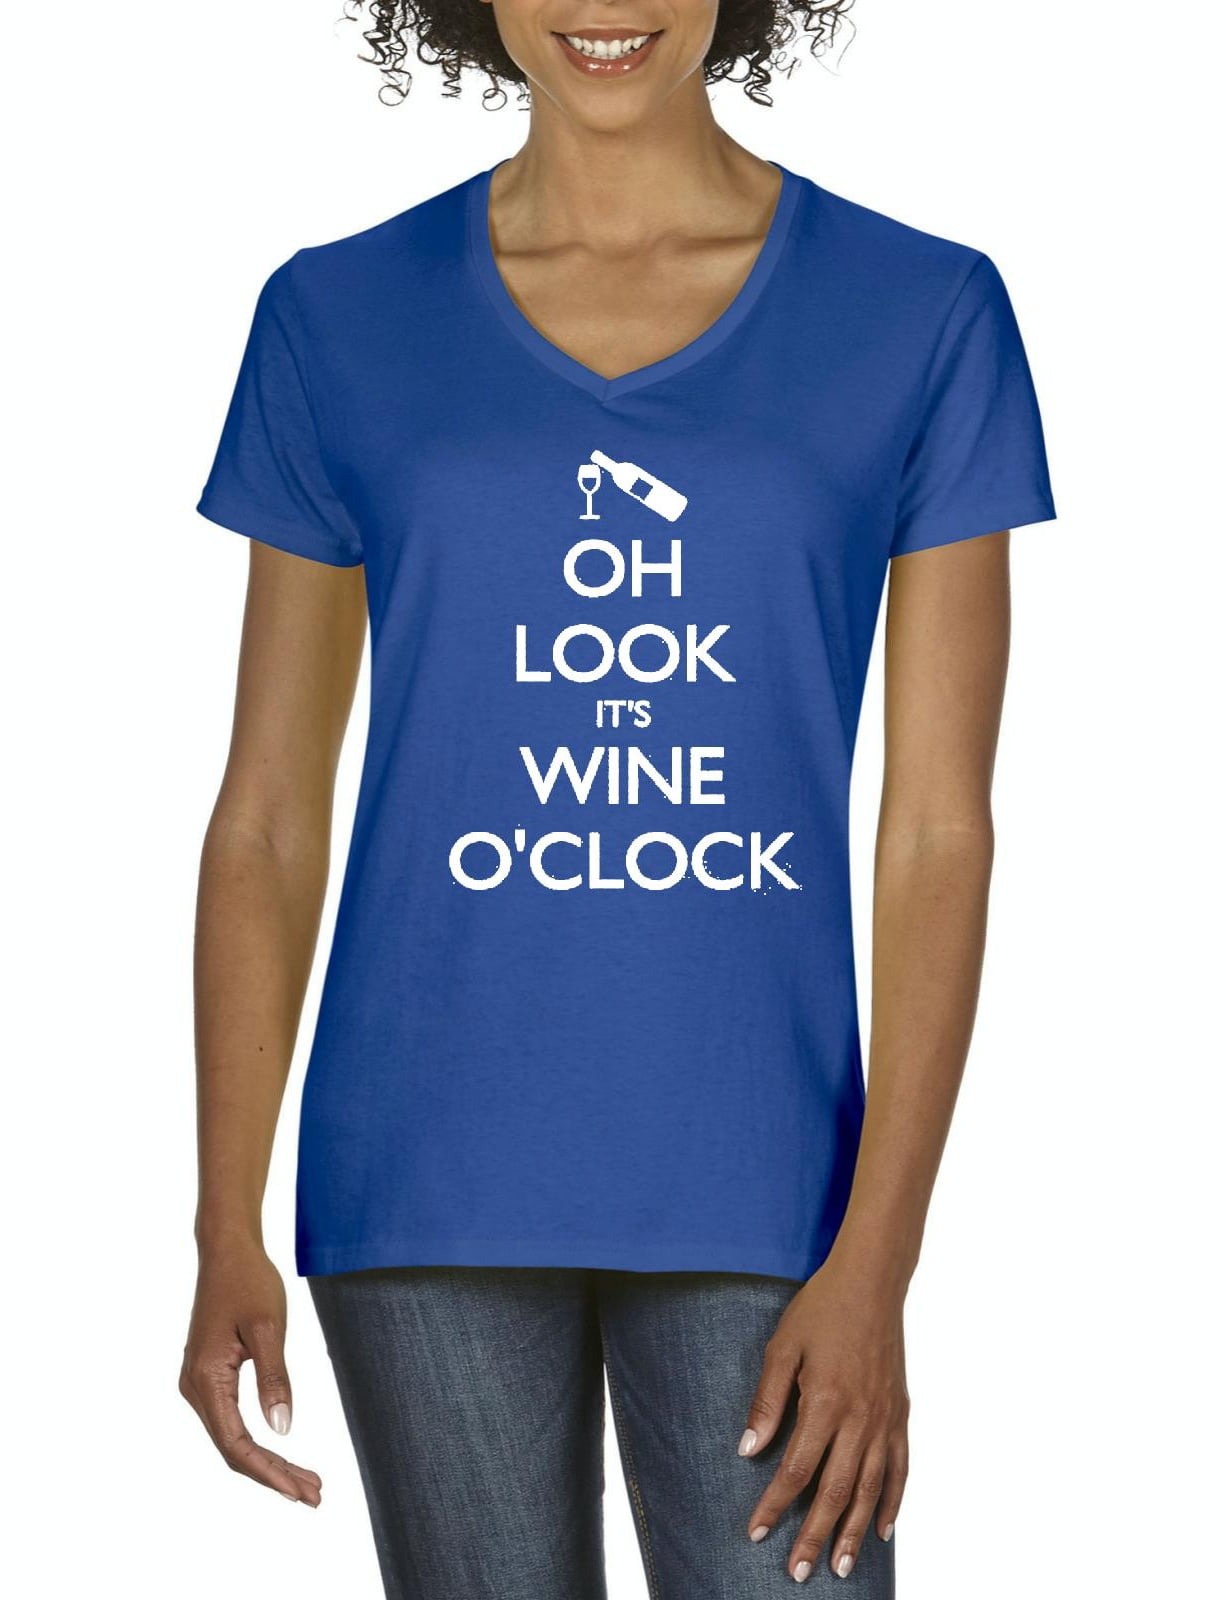 Funny Sweatshirt Sweatshirt Party Sweatshirt May Contain Wine Women's Sweatshirt Birthday Gifts Personalized Gift Wine O'Clock